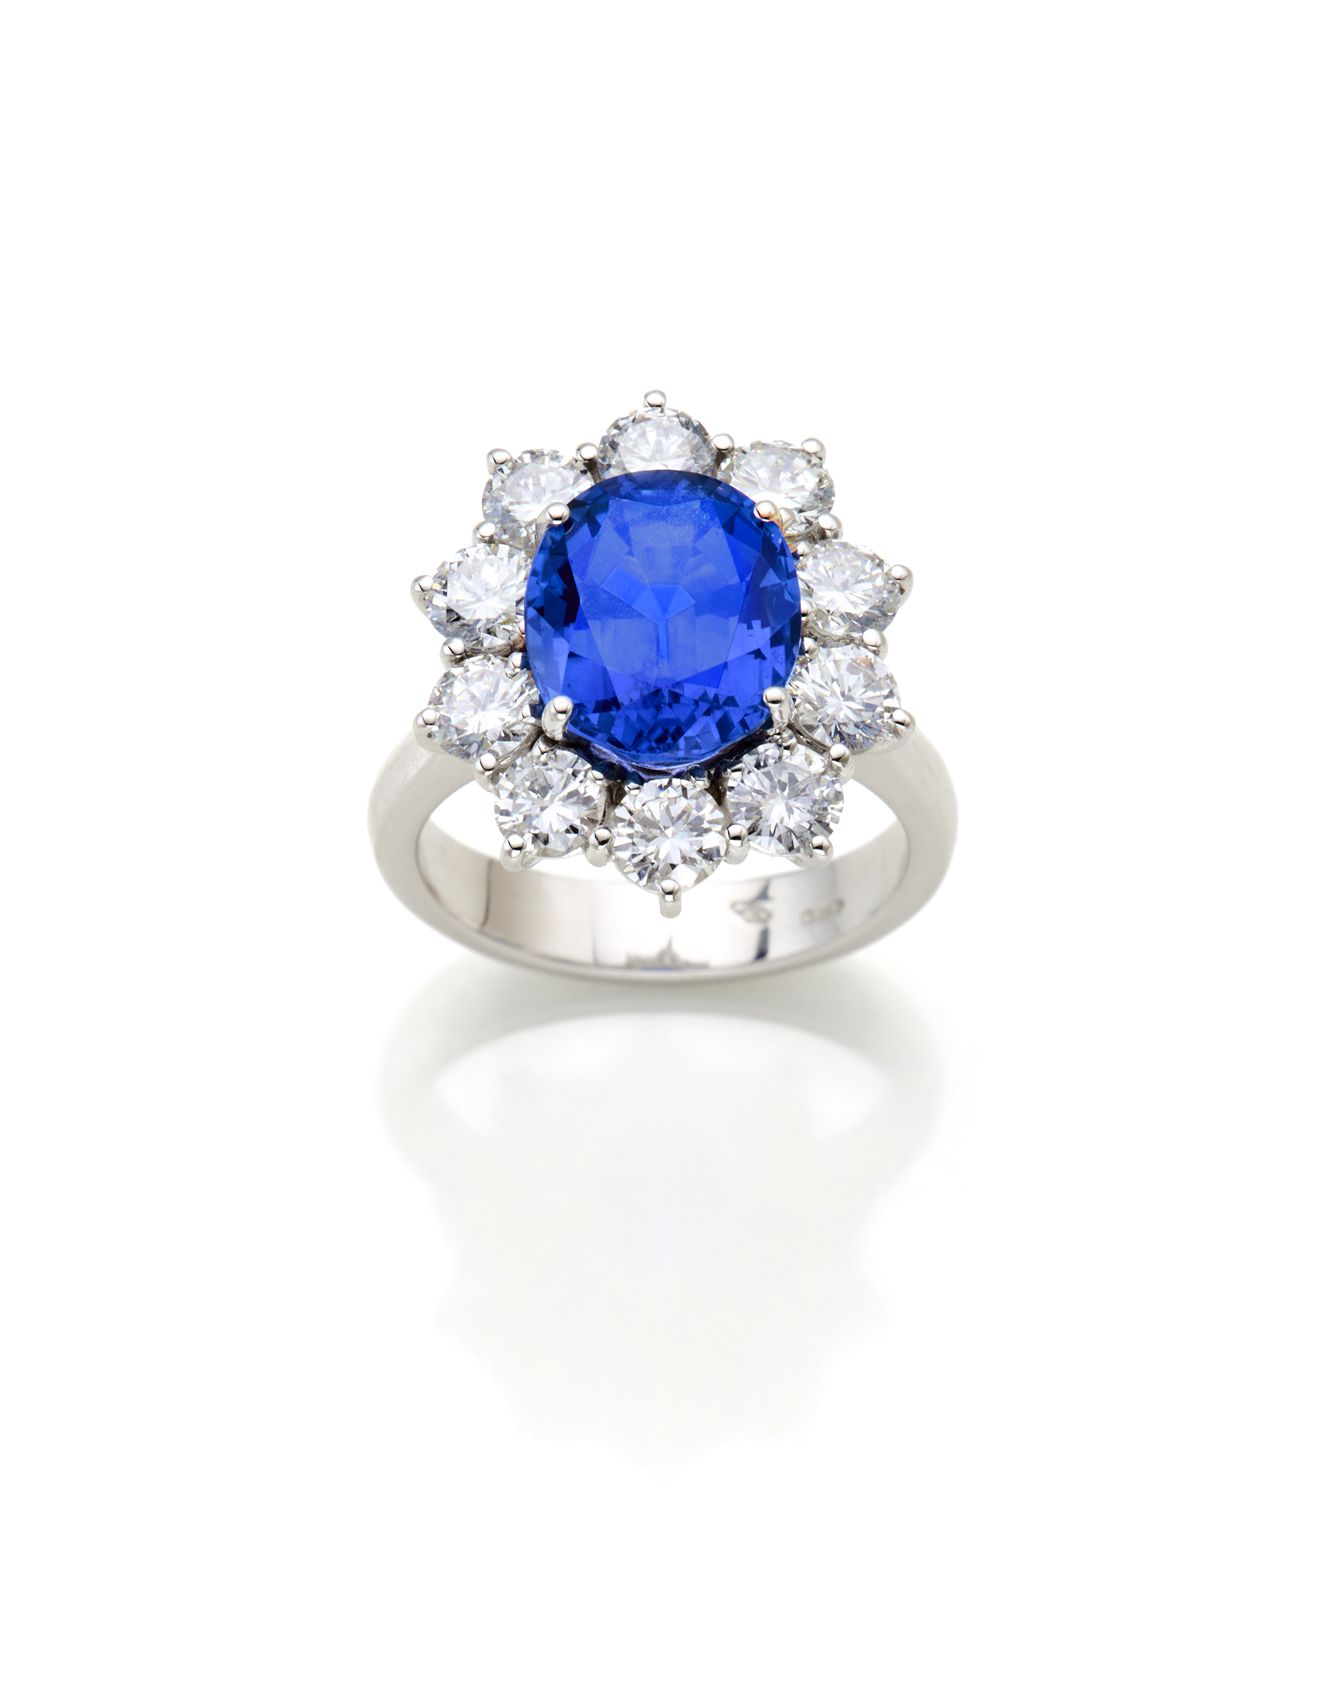 Null 椭圆形ct.约5.80克拉的蓝宝石和圆形钻石白金戒指，钻石全部为克拉，约2.30克拉，约9.01克，尺寸14/54。标记为3001 AL。

所附宝石&hellip;